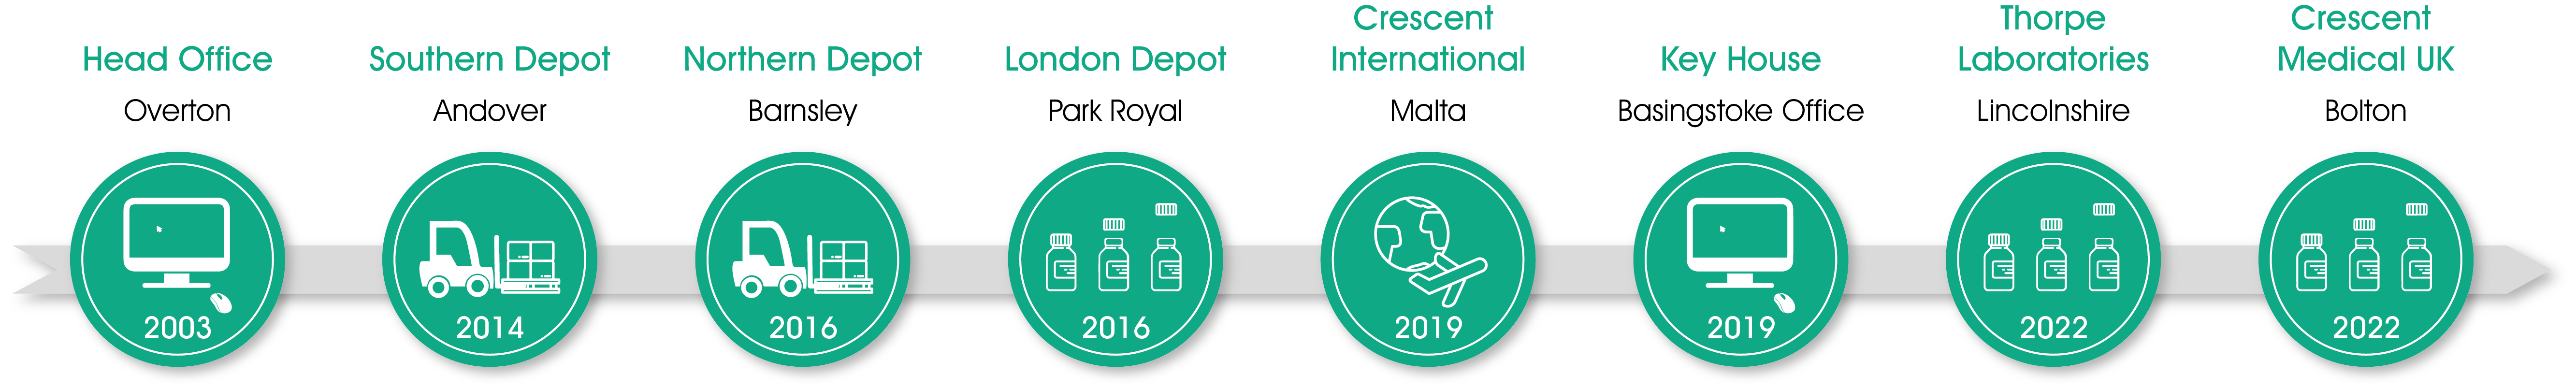 Crescent Pharma, Andover Warehouse, Barnsley Warehouse, Crescent Manufacturing, Crescent International, Thorpe Laboratories, Crescent Medical UK